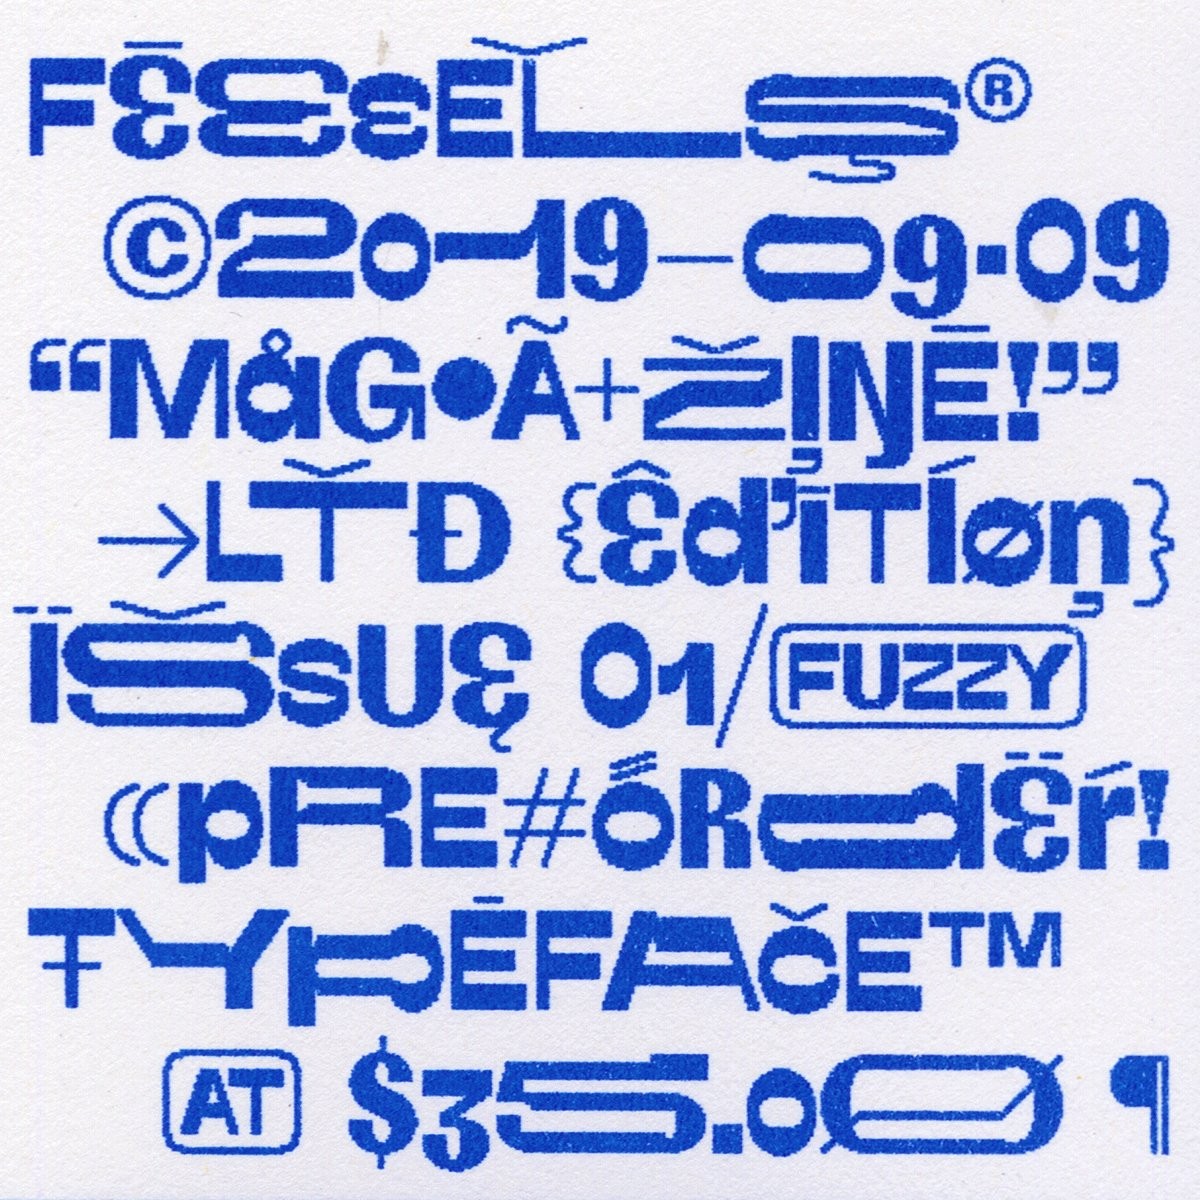 Custom typeface for @feeeels.mag